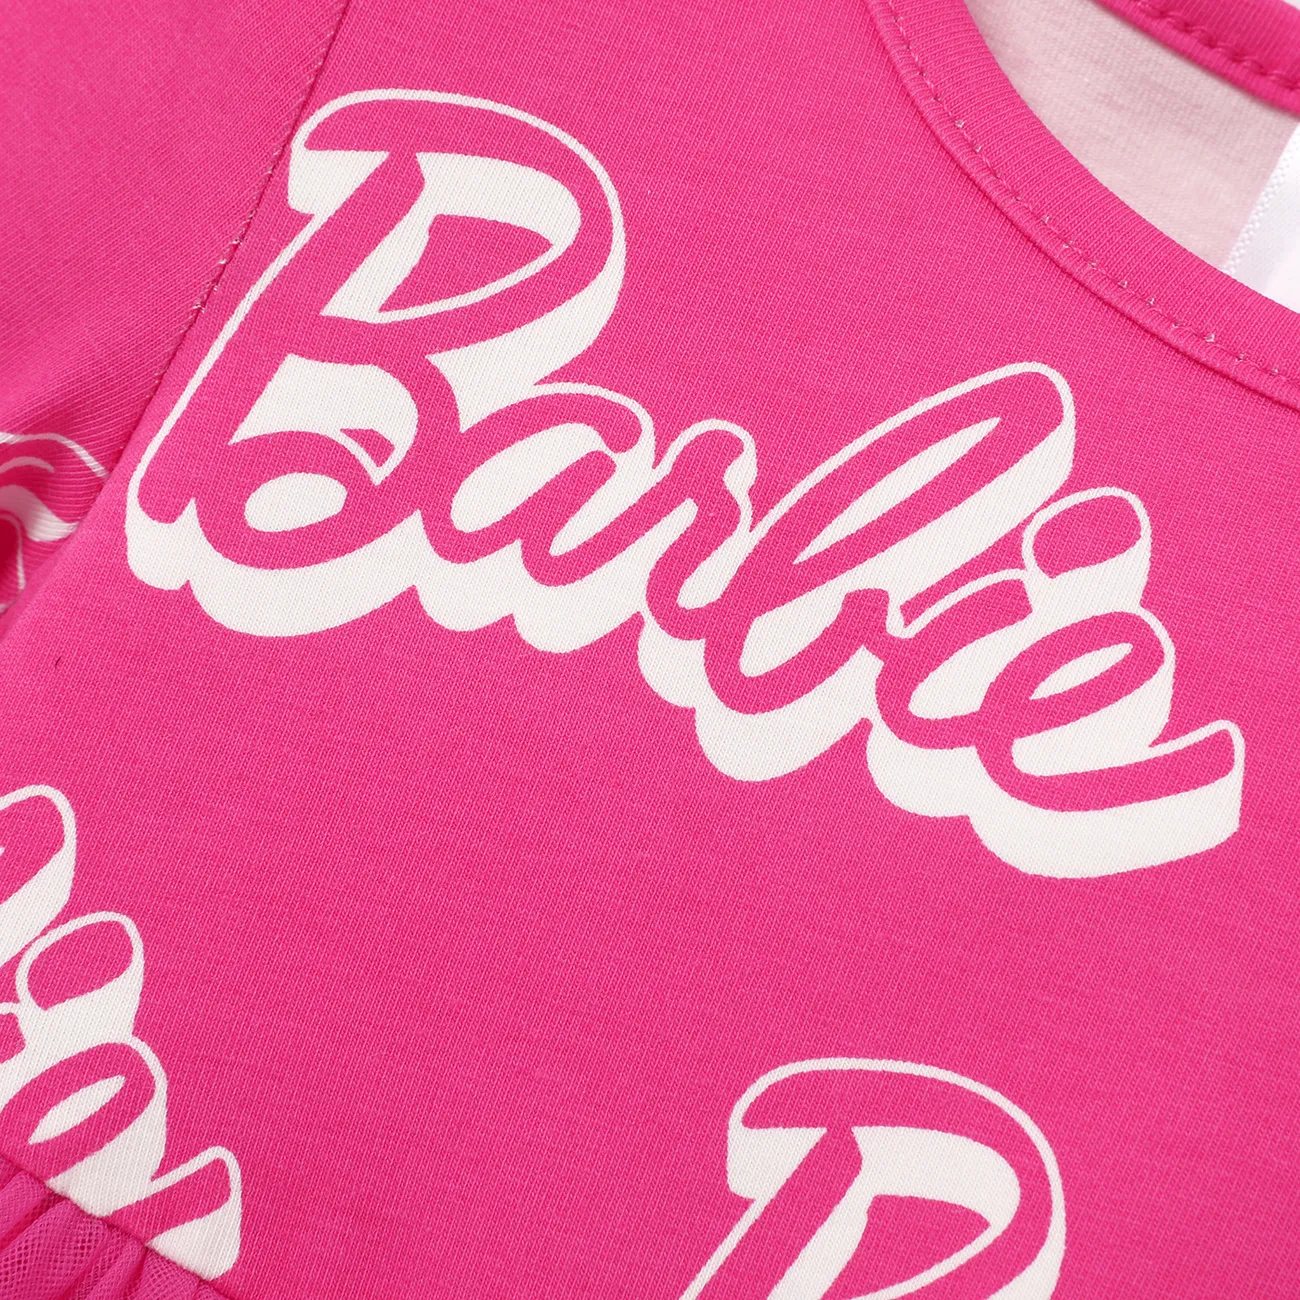 Barbie Baby Girl Cotton Letter Print Sesh Tutu Skirt  Roseo big image 1